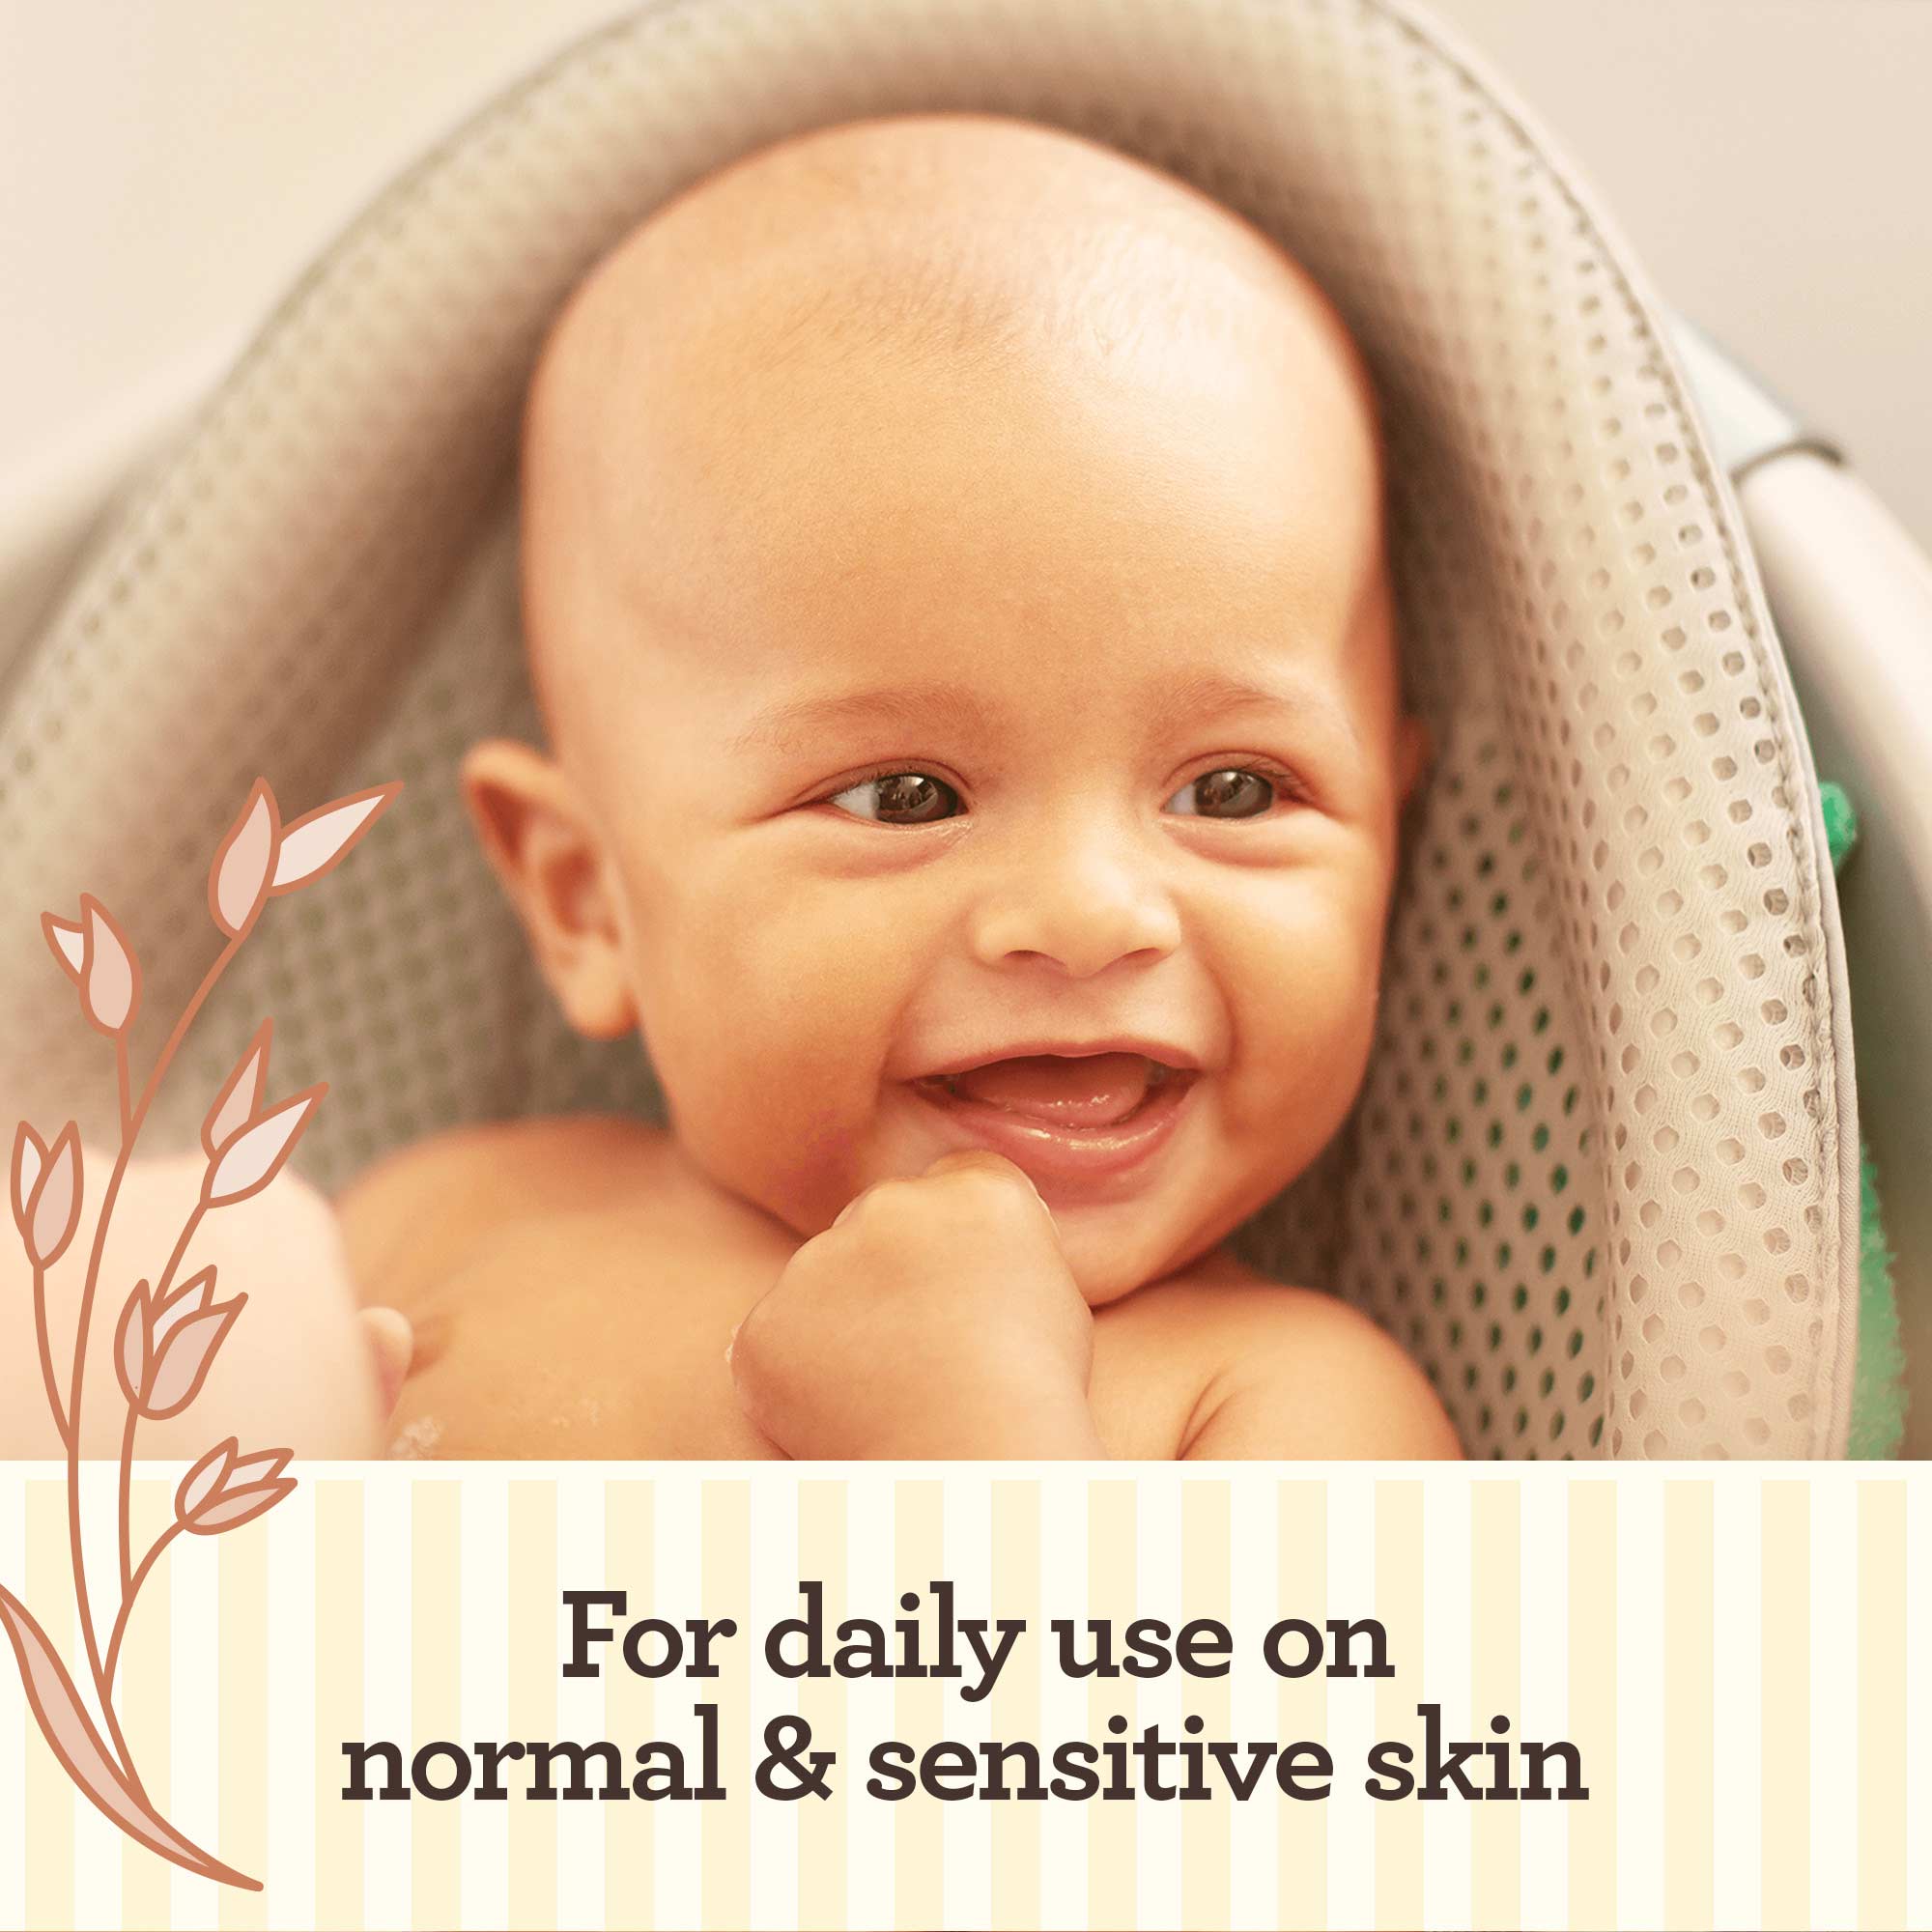 AVEENO BABY Daily care gentle bath & wash for sensitive skin 400ml